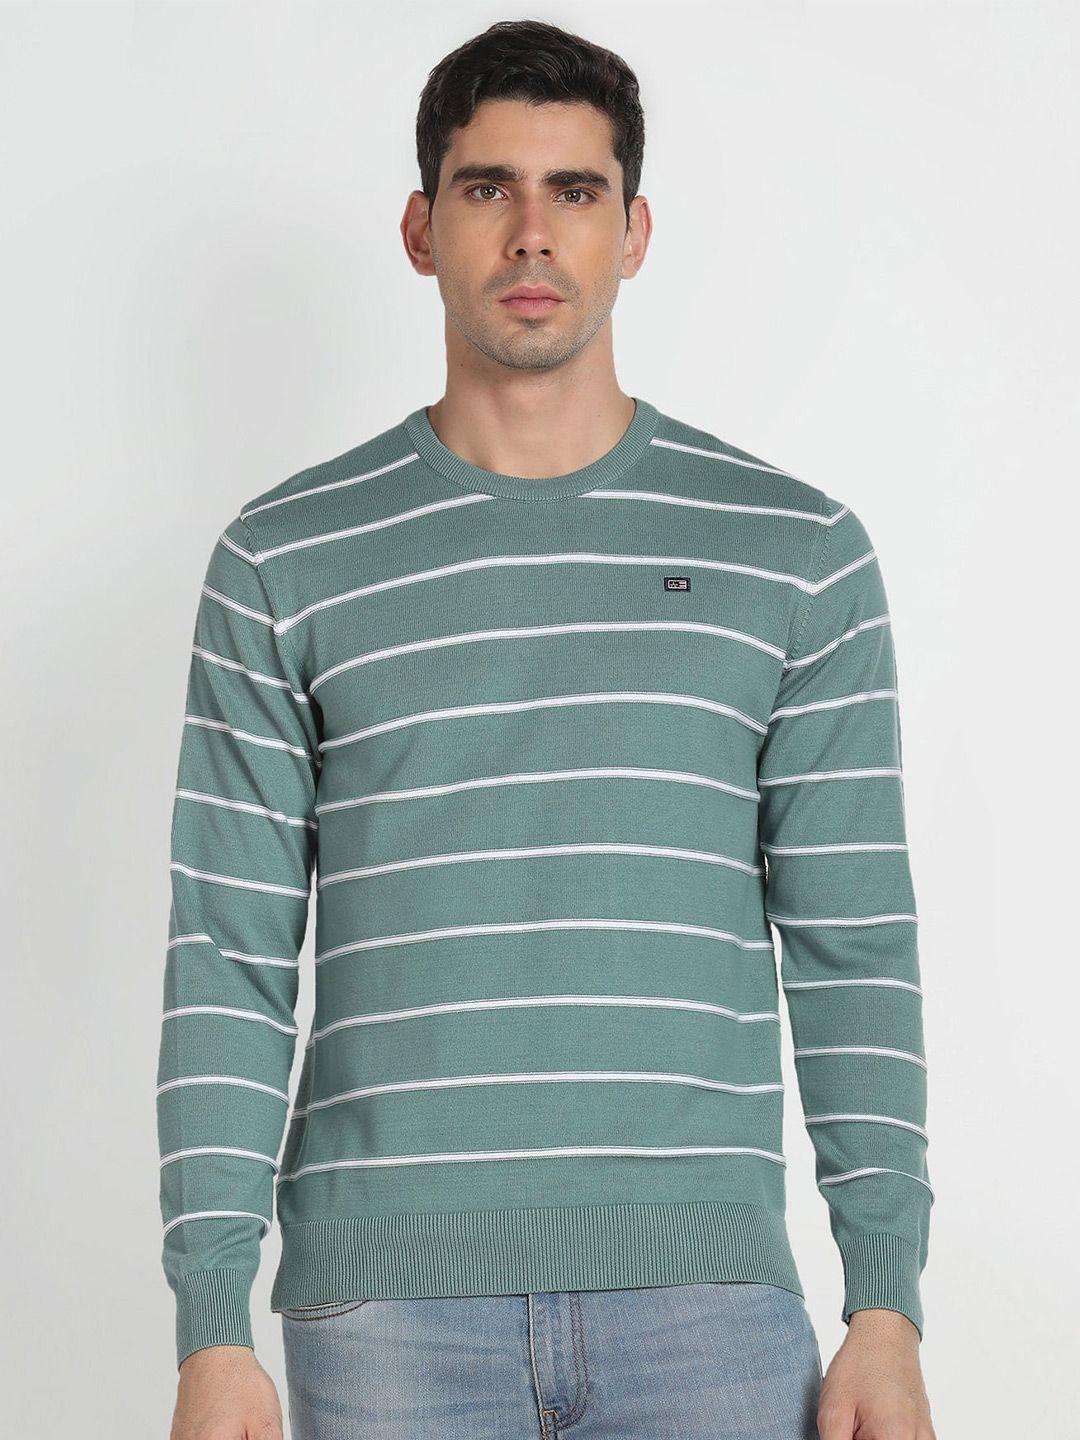 arrow-sport-round-neck-striped-pure-cotton-pullover-sweater